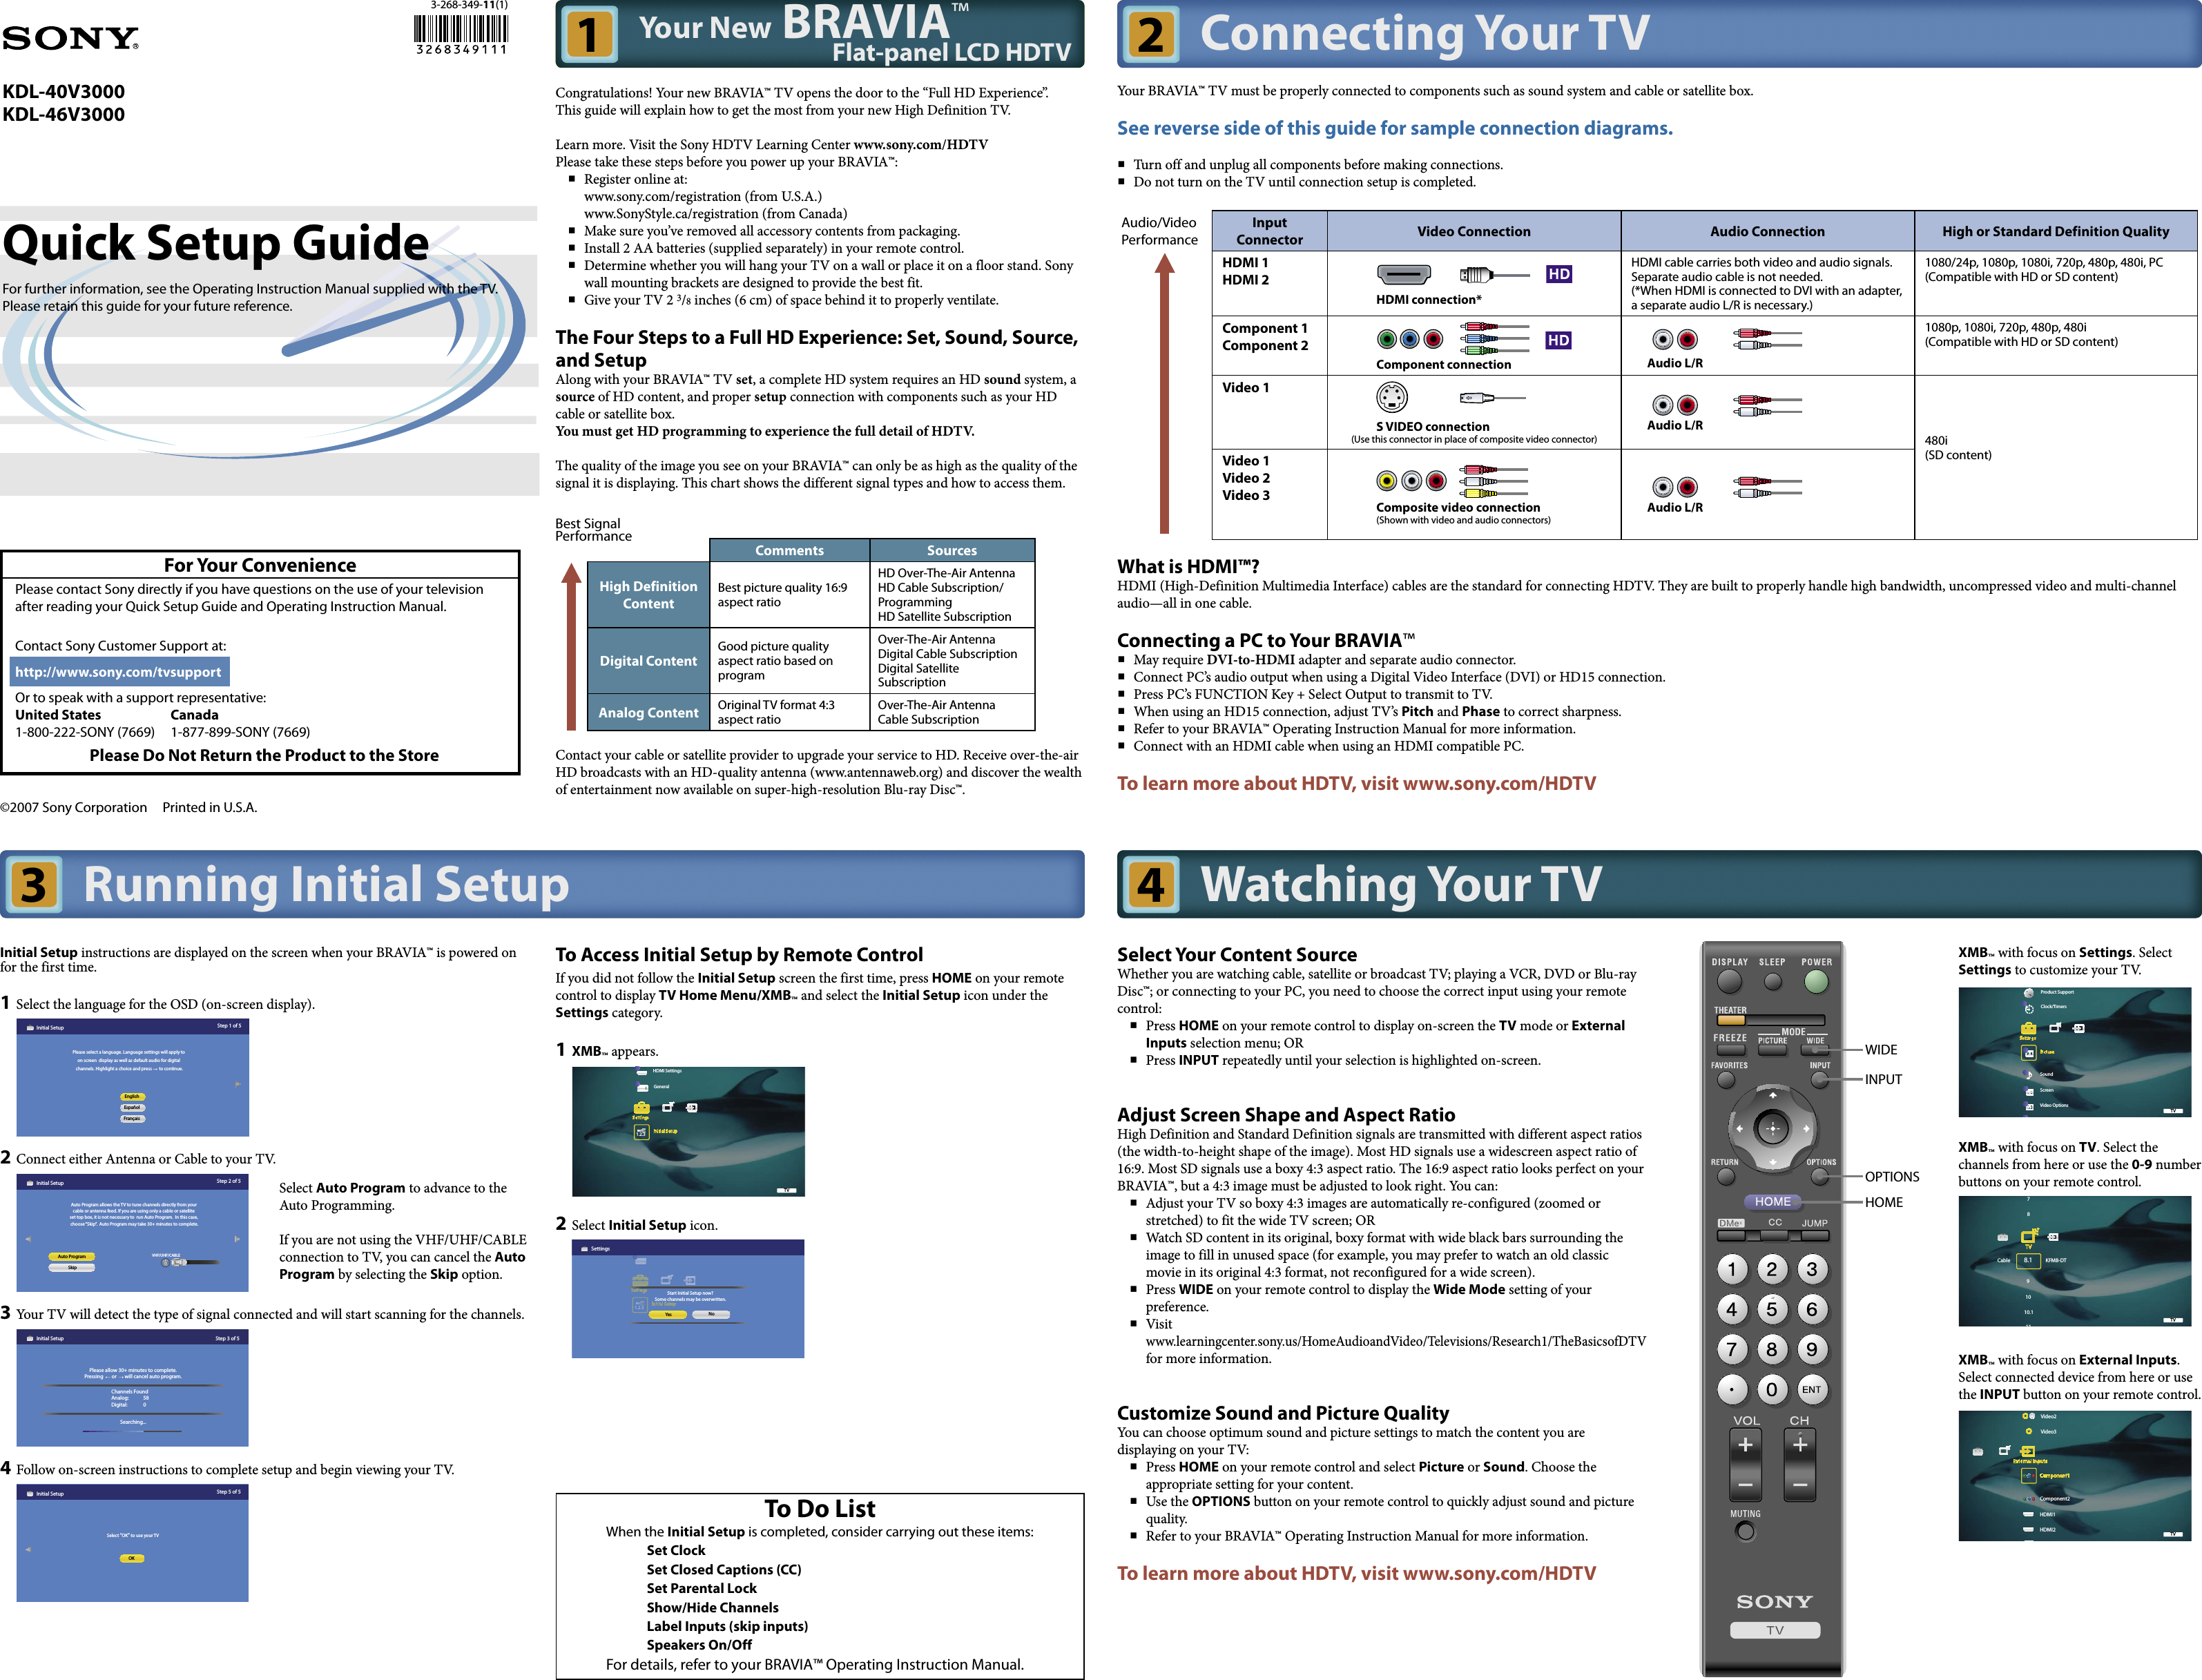 Page 1 of 2 - Sony KDL-40V3000 KDL-40V3000/KDL-46V3000 User Manual Quick Setup Guide KDL40V3000 Qsg